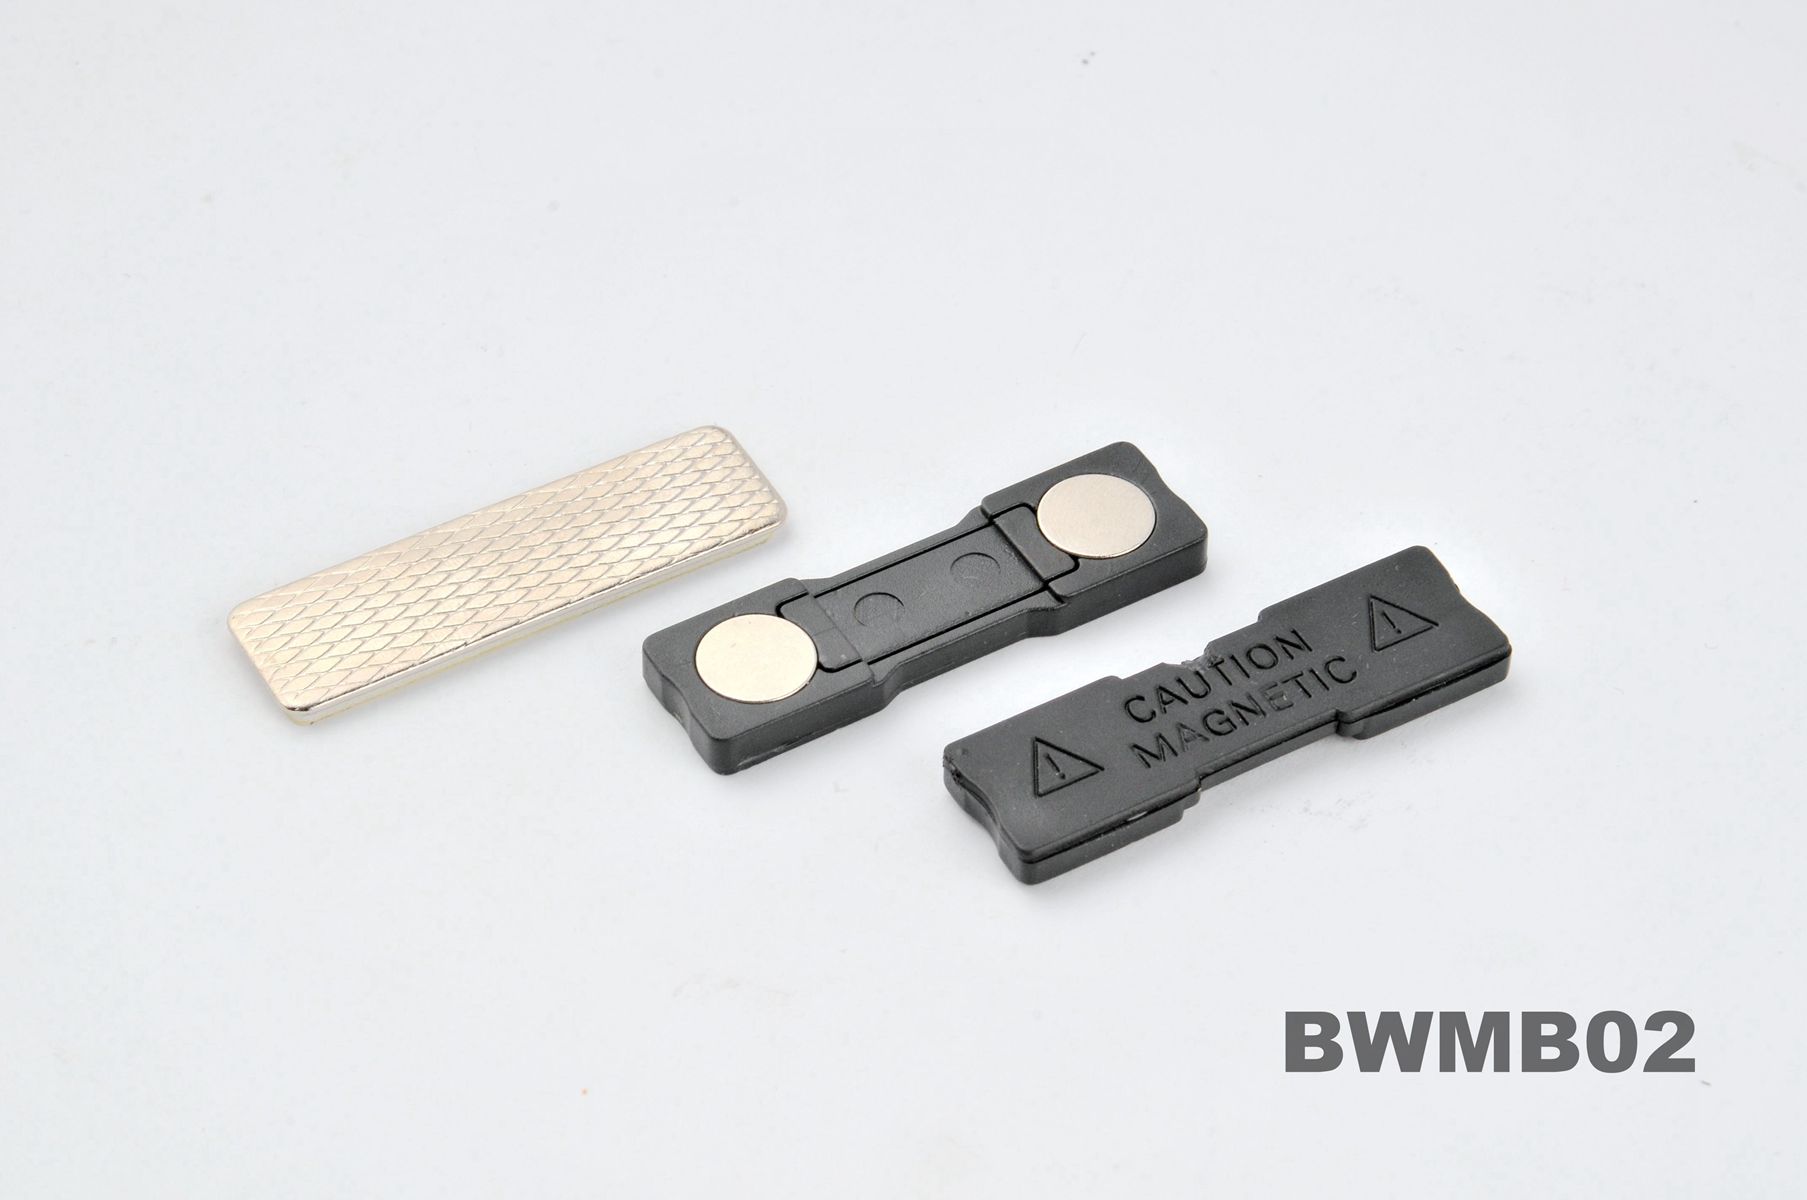 BWMB02 Magnetic Name Badge Holder